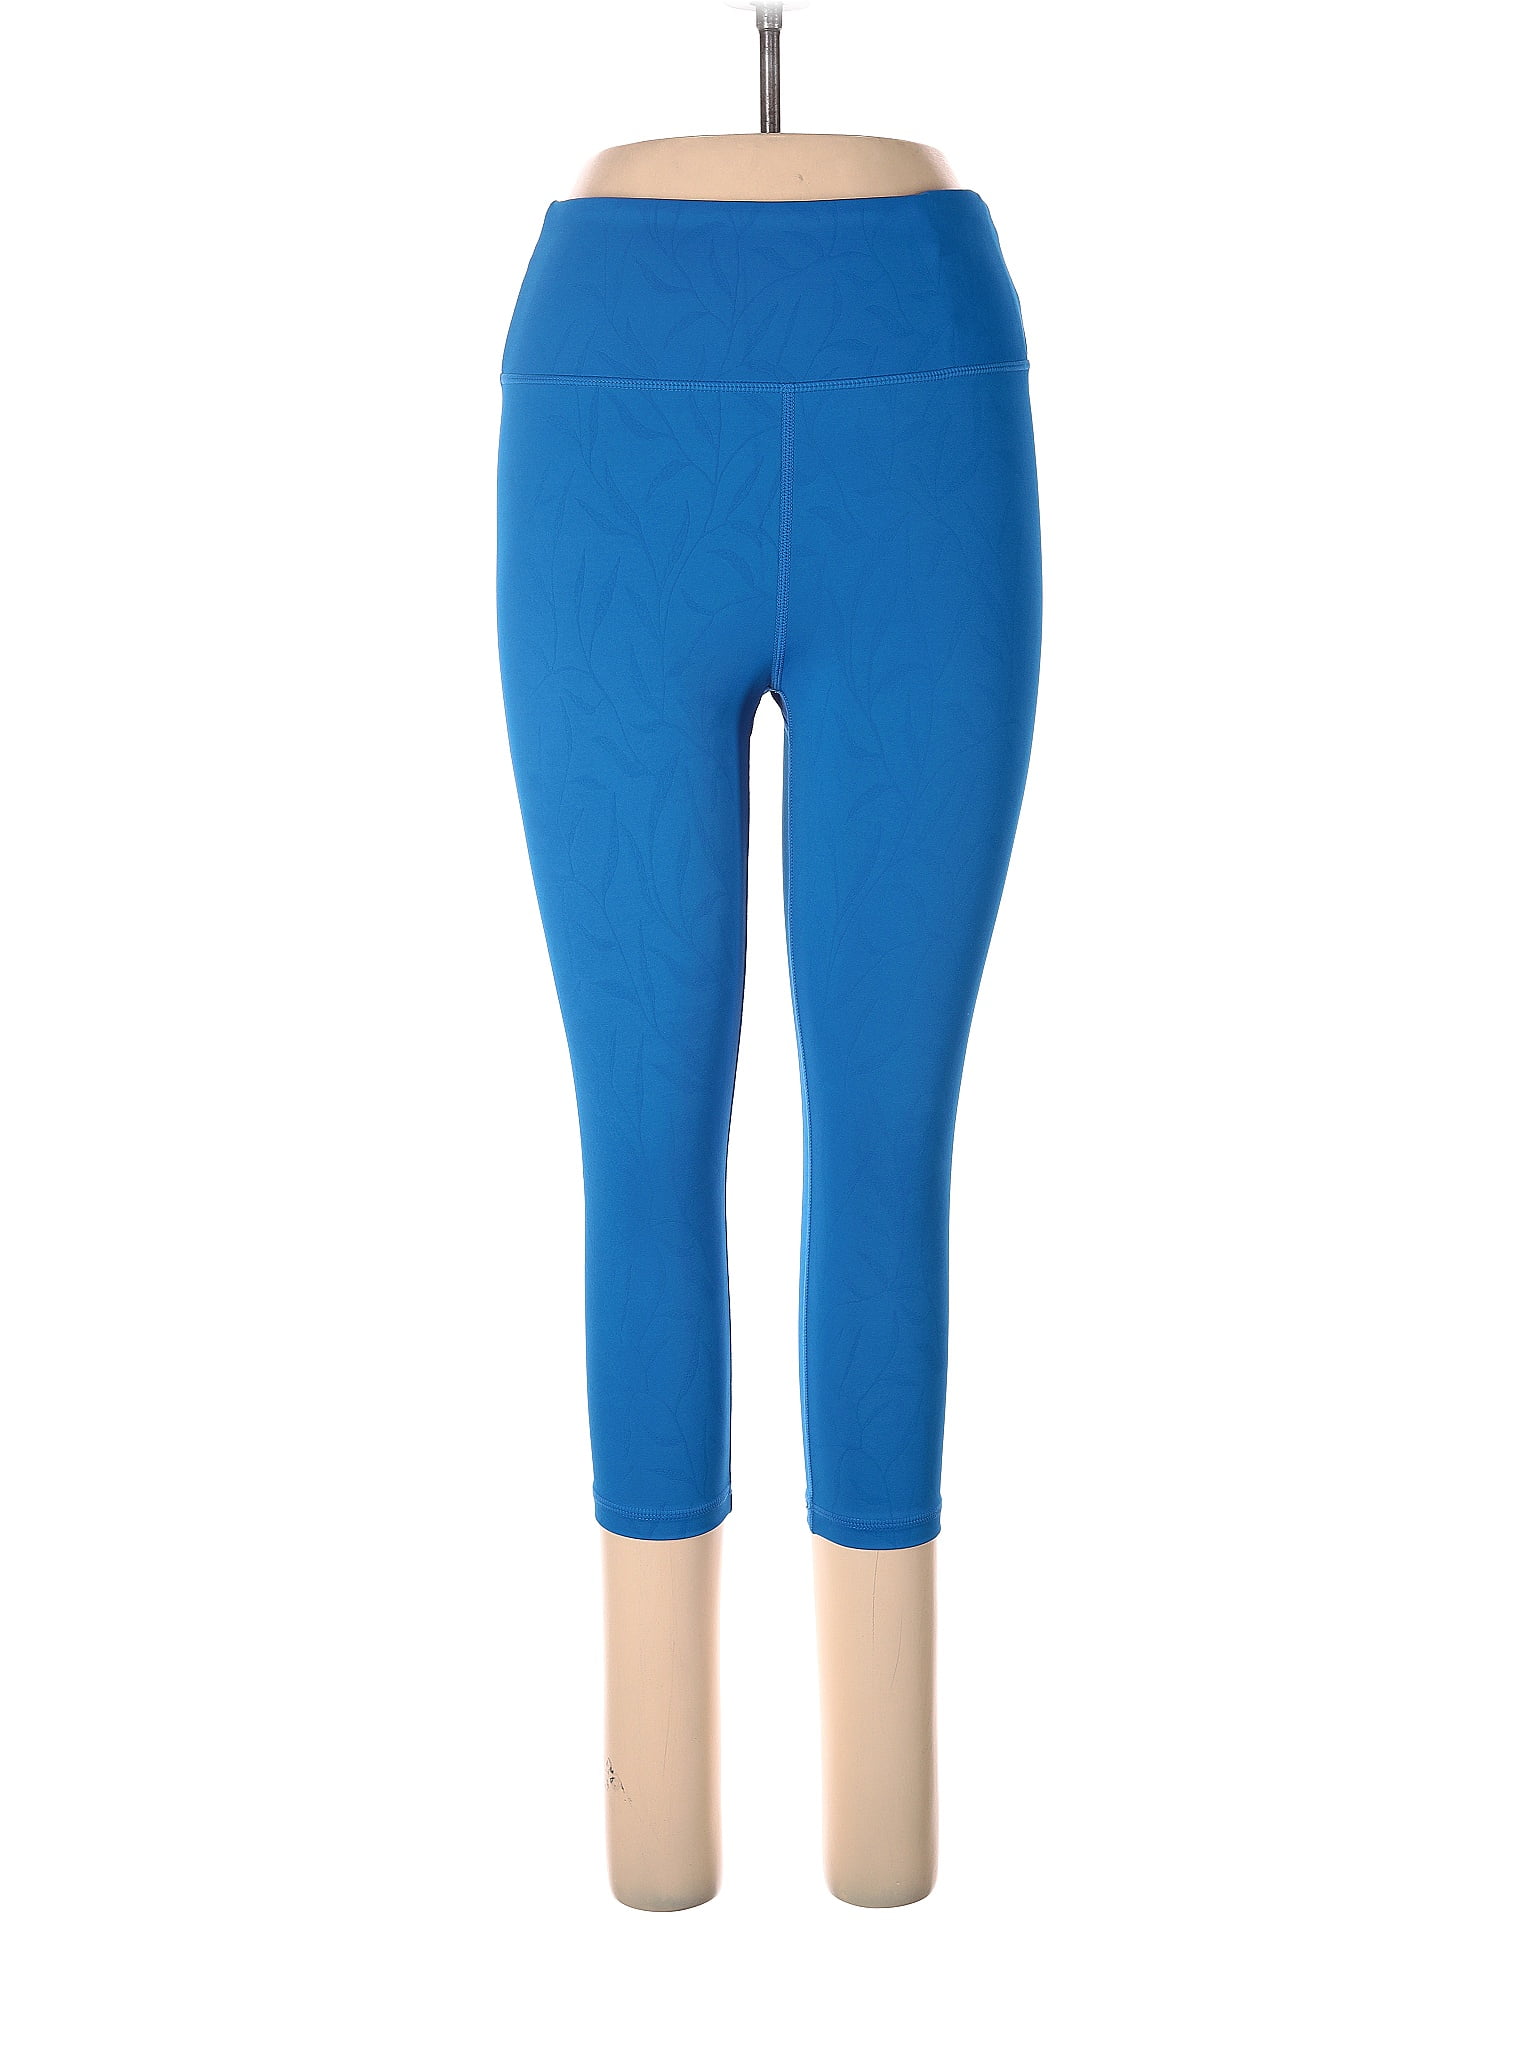 Zyia Active Blue Yoga Pants Size 8 - 10 - 63% off